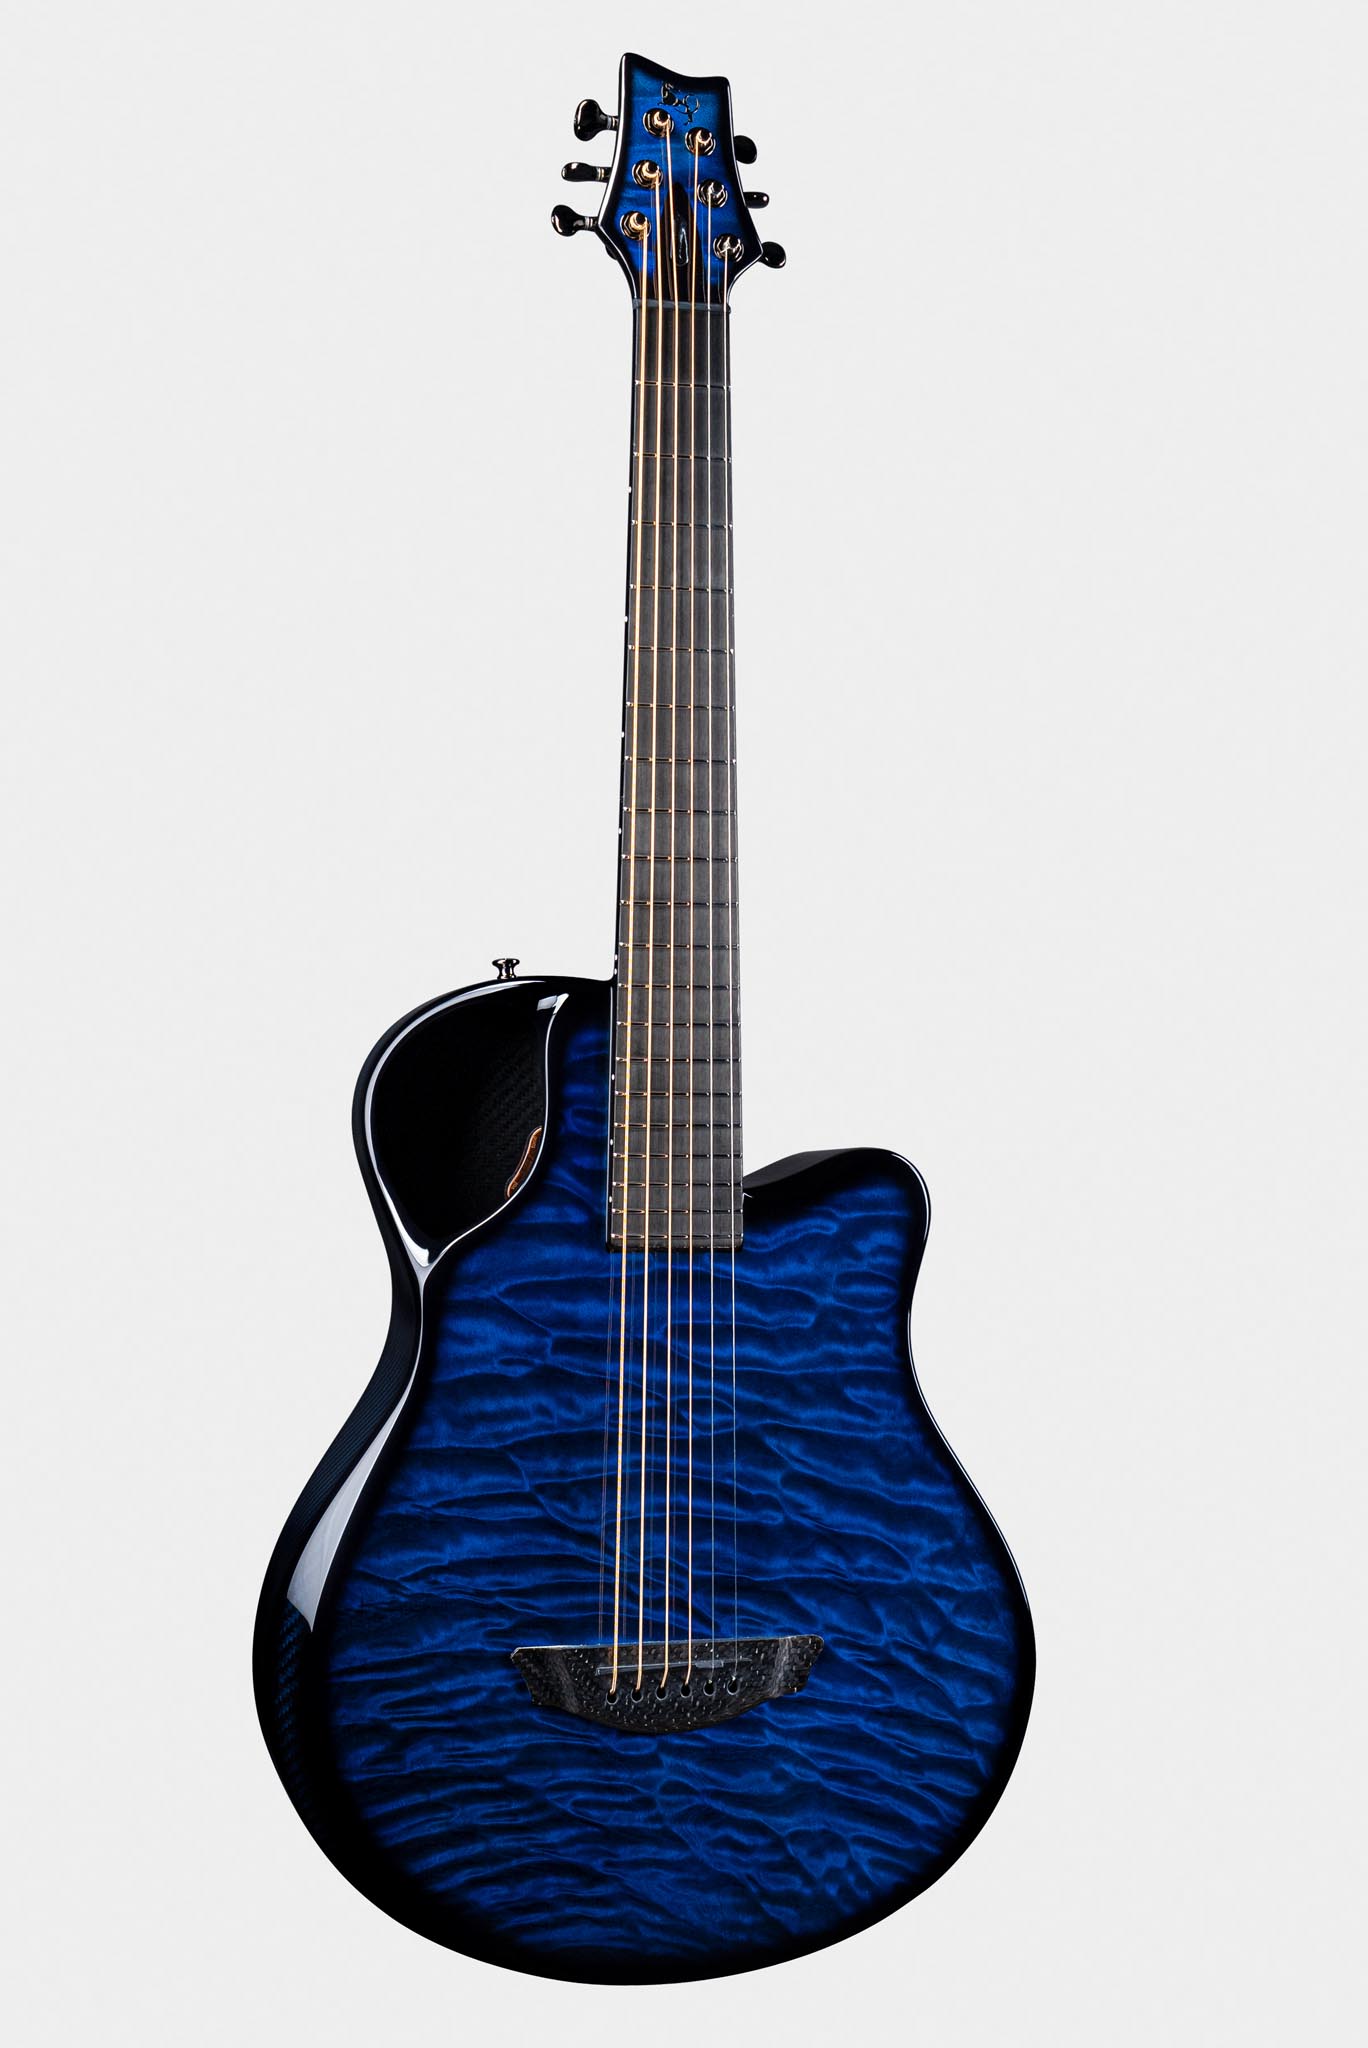 Emerald X7 Guitar in Blue, Made of Carbon Fiber